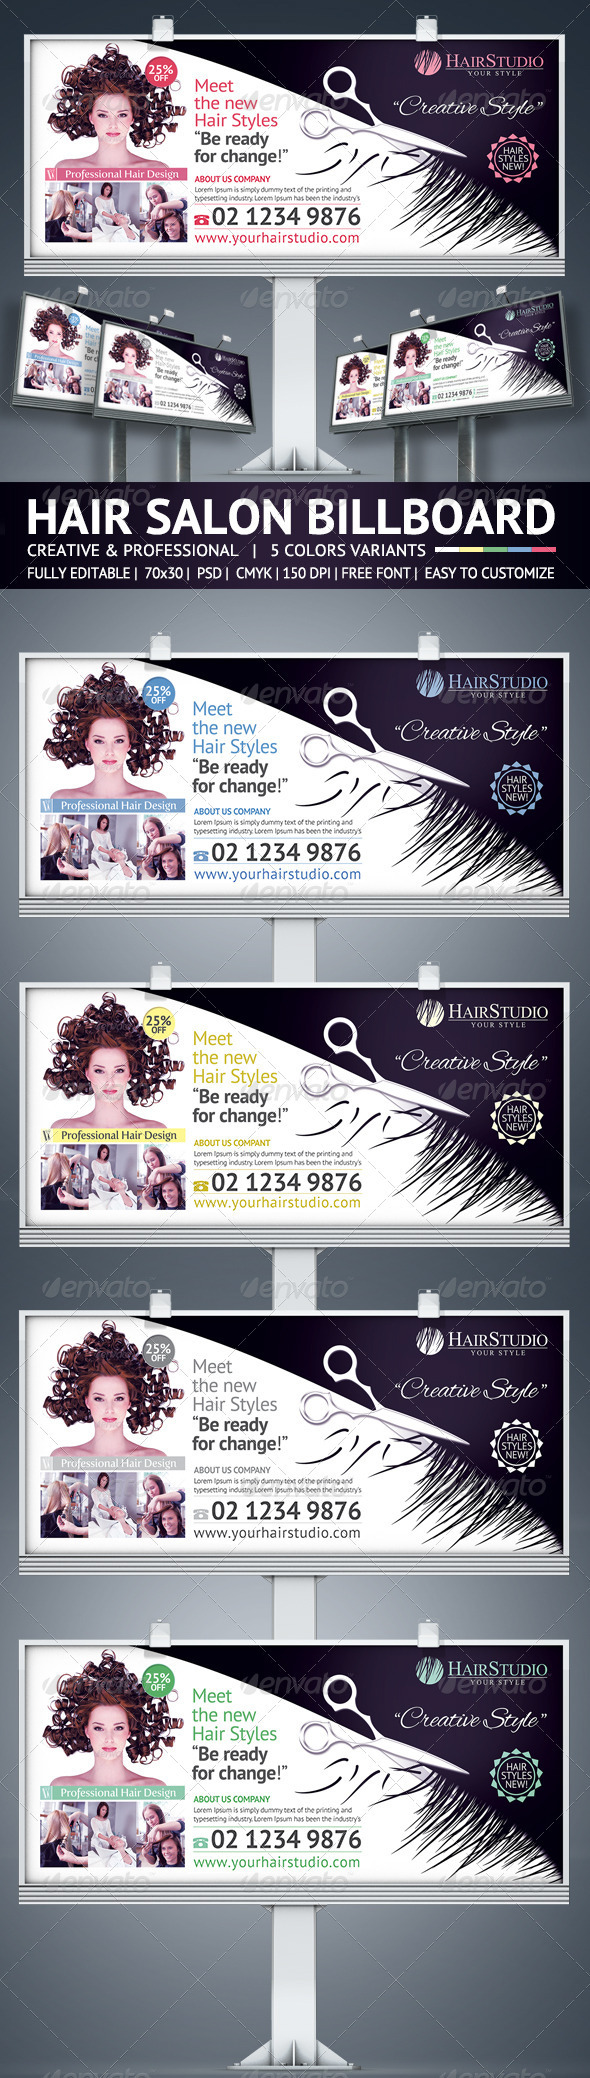 Hair Salon billboard hair salon billboard banner creative hair salon design modern template professional